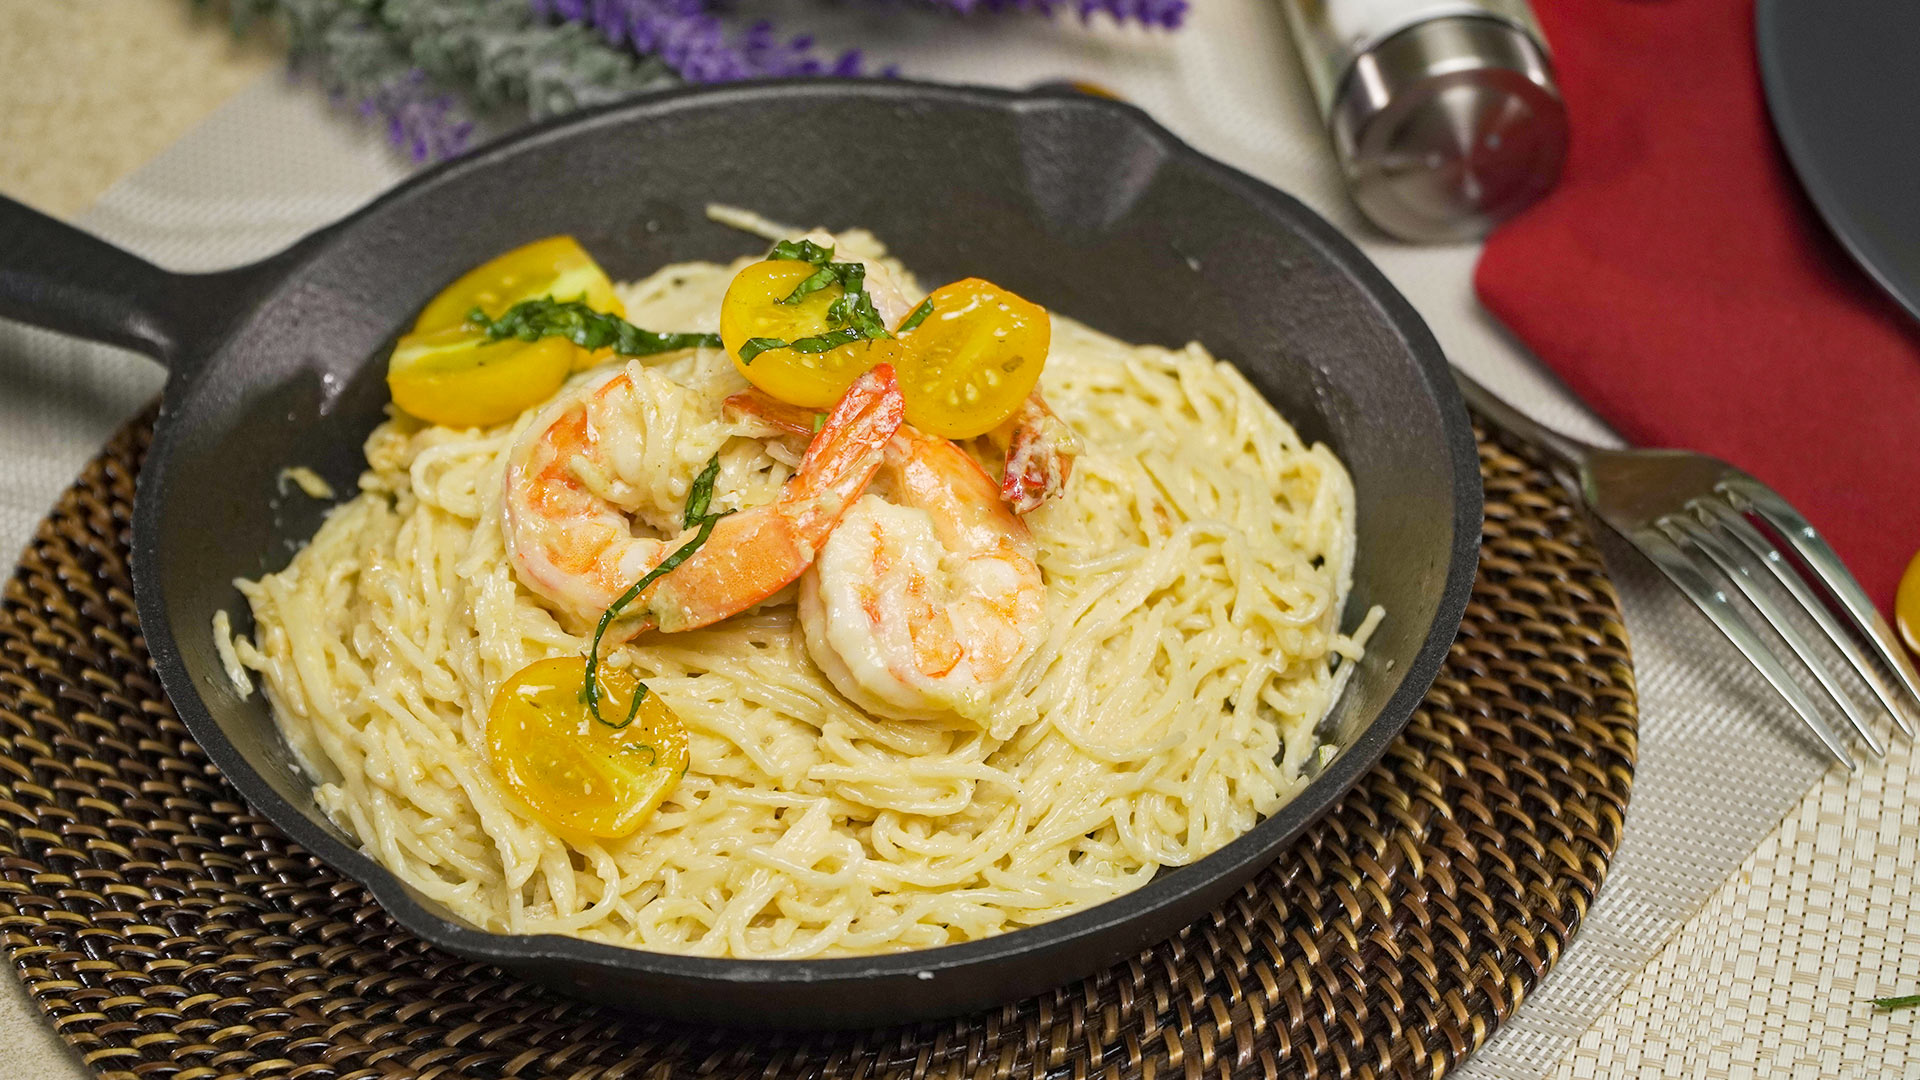 Olive Garden Spaghetti Carbonara - CopyKat Recipes